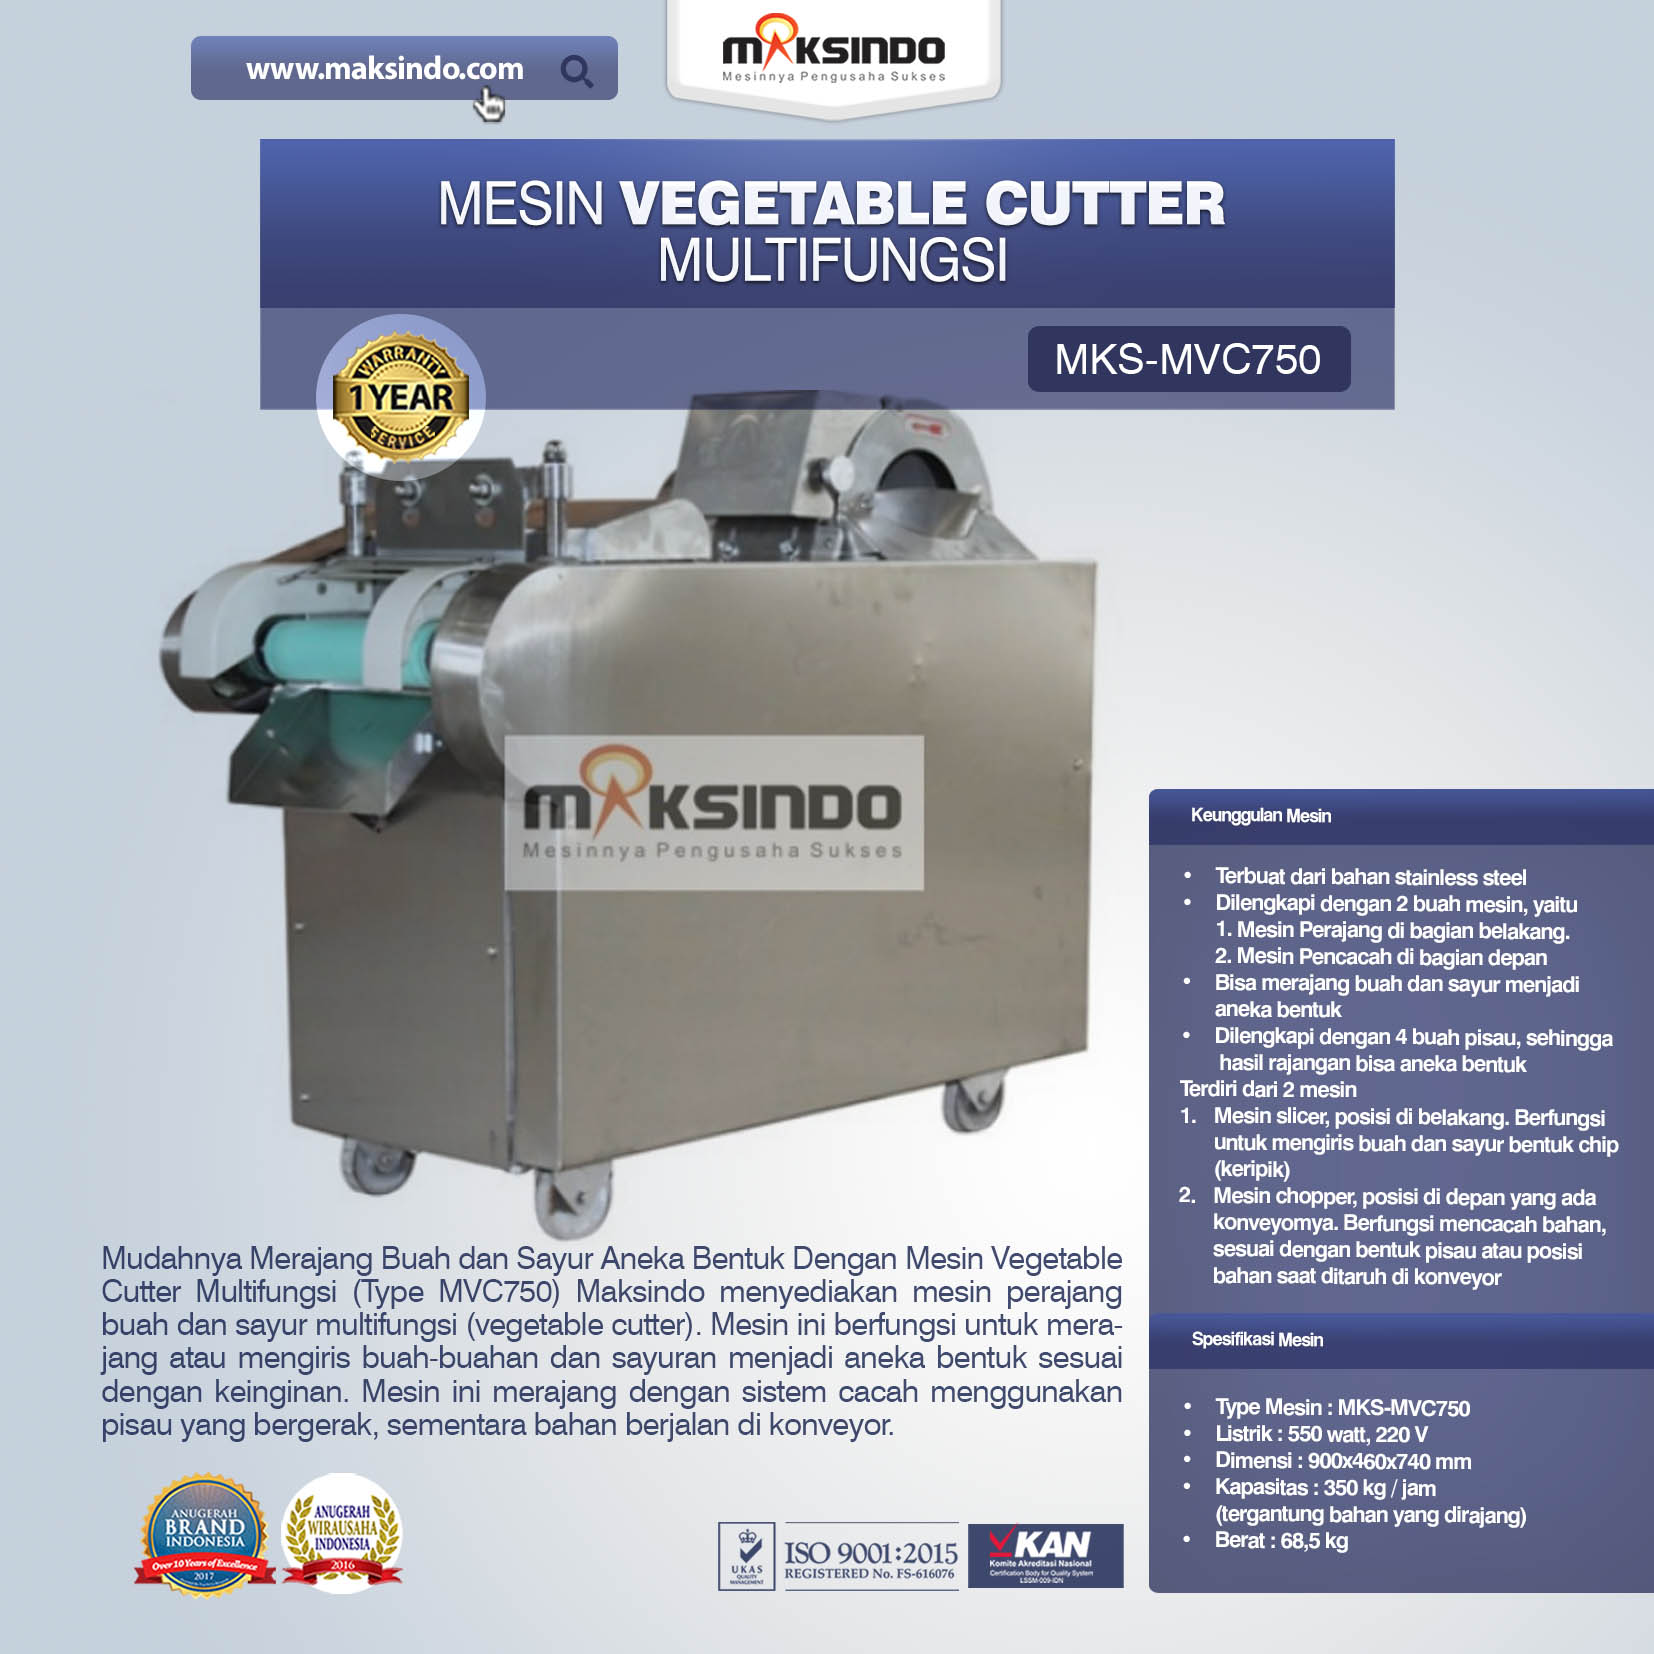 Mesin Vegetable Cutter Multifungsi (Type MVC750)